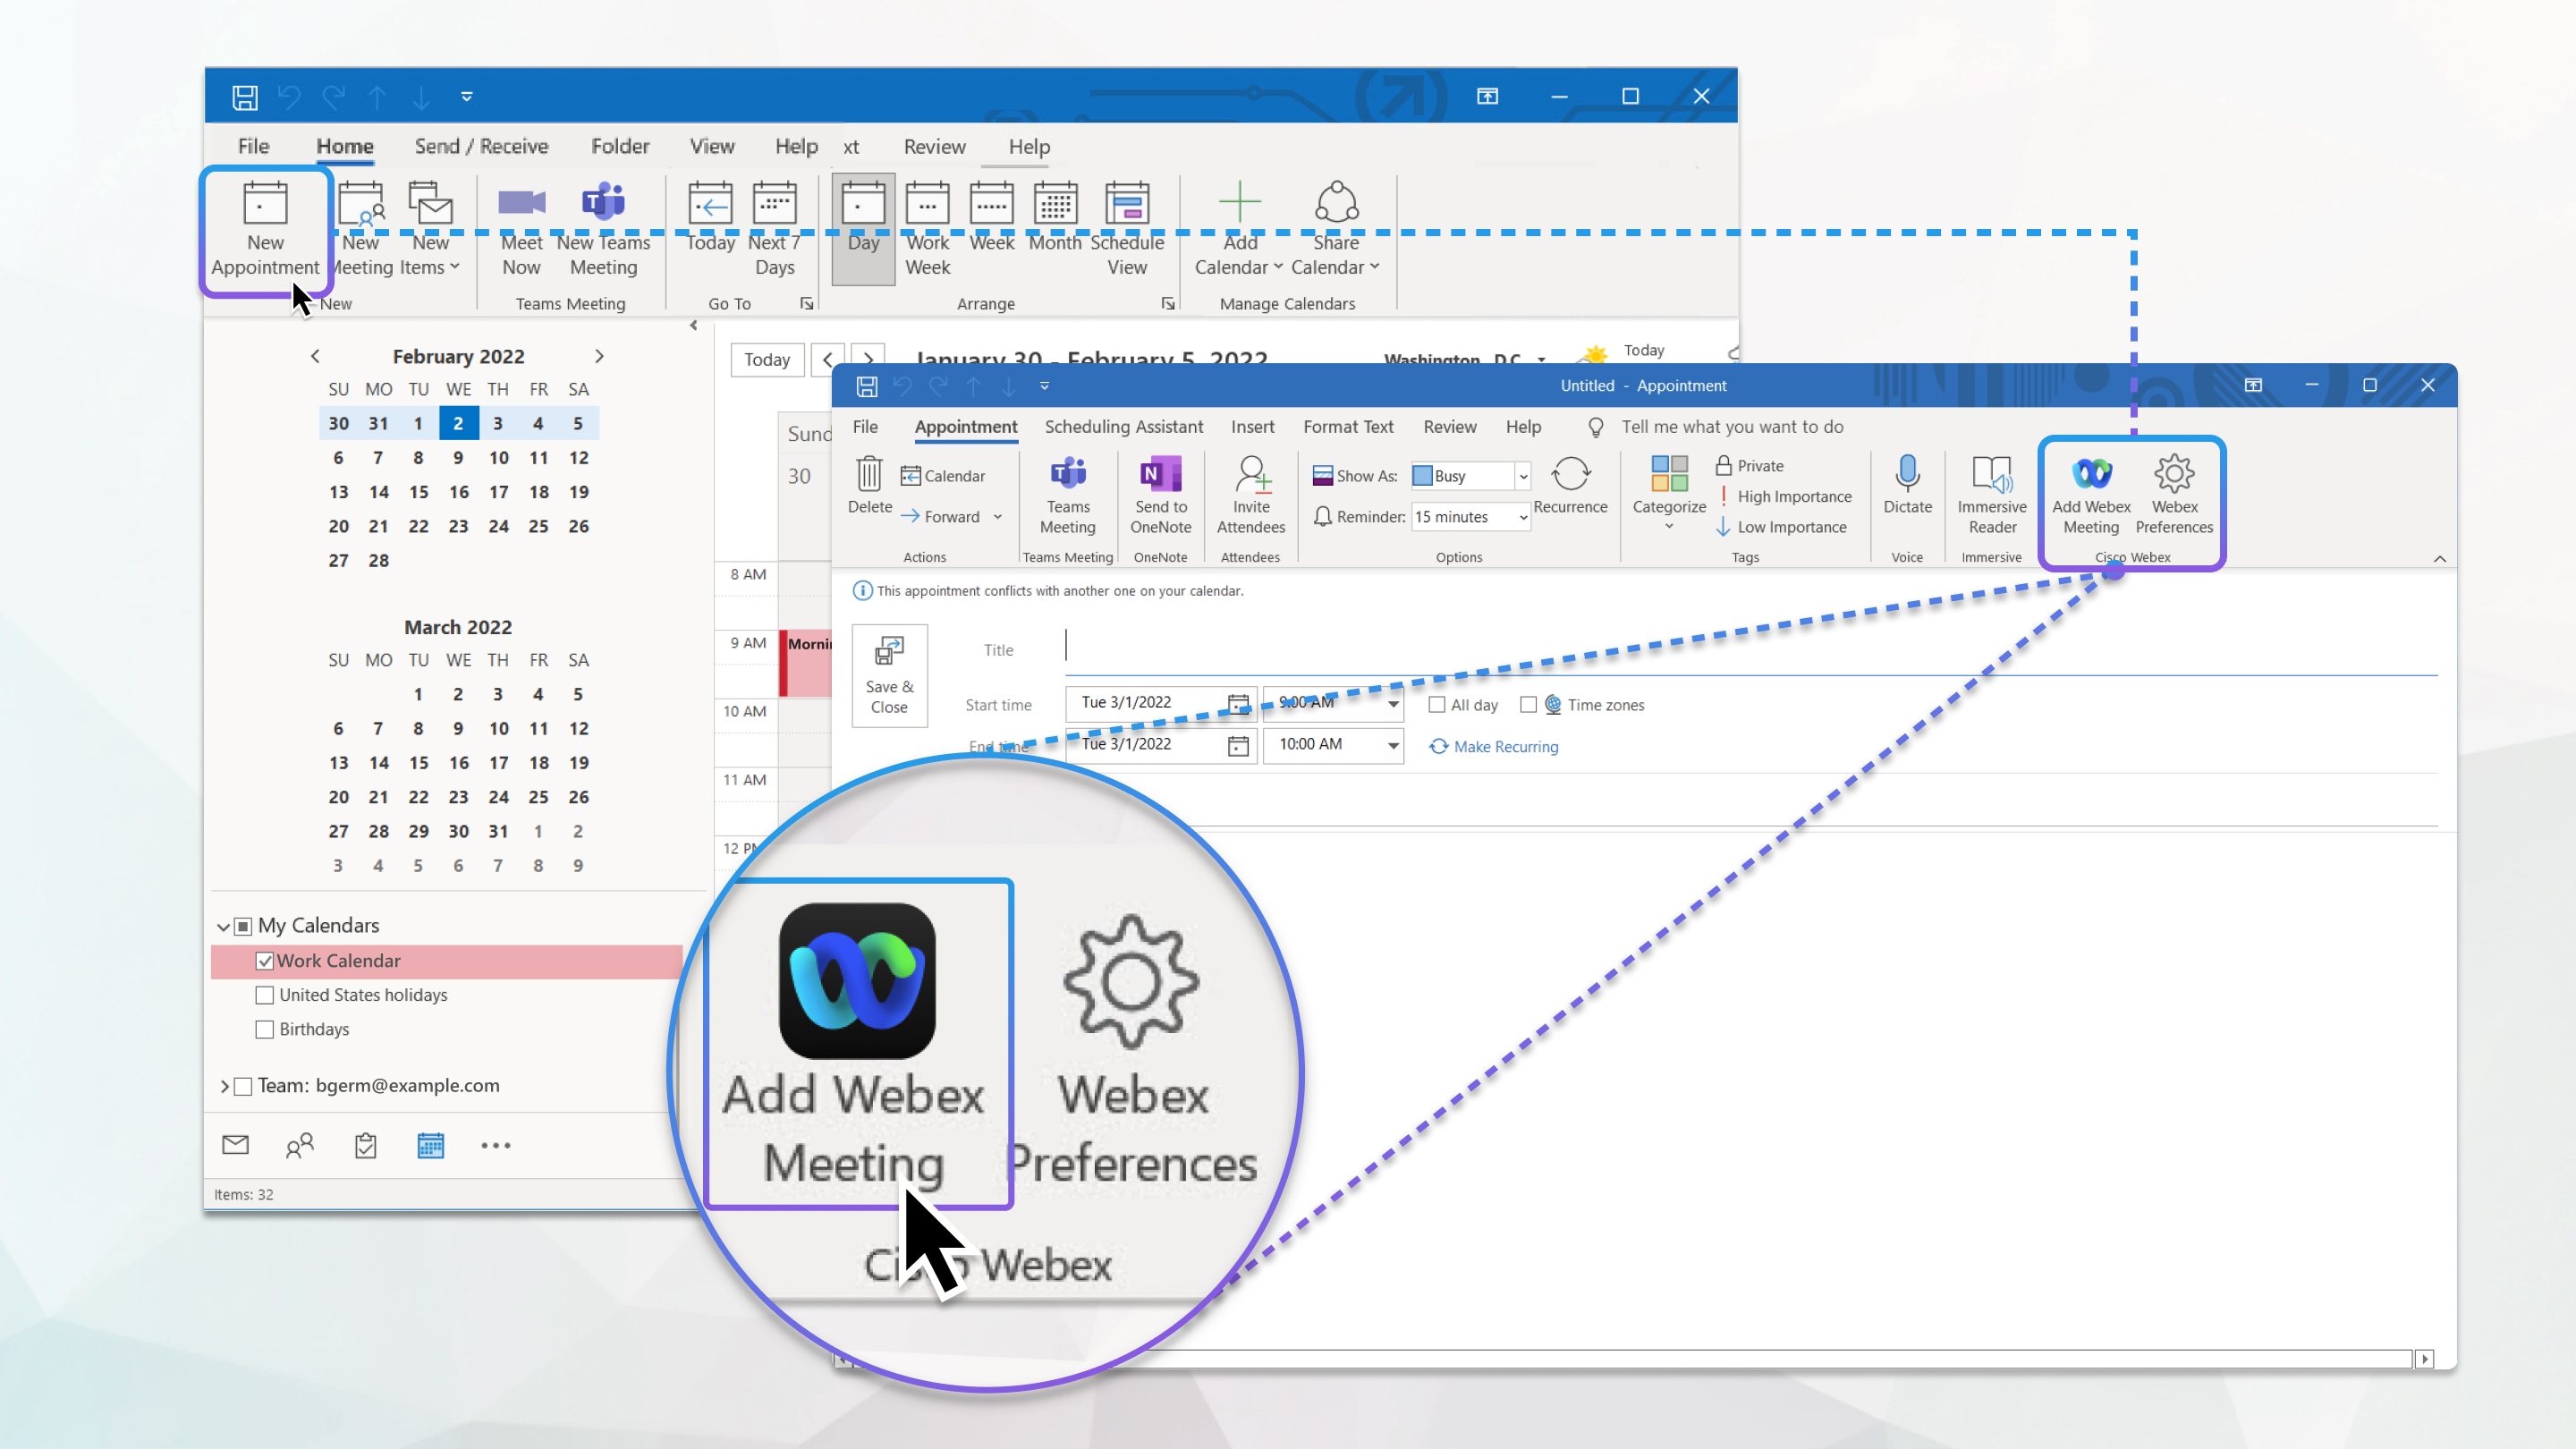 webex productivity tools download windows 10 .exe